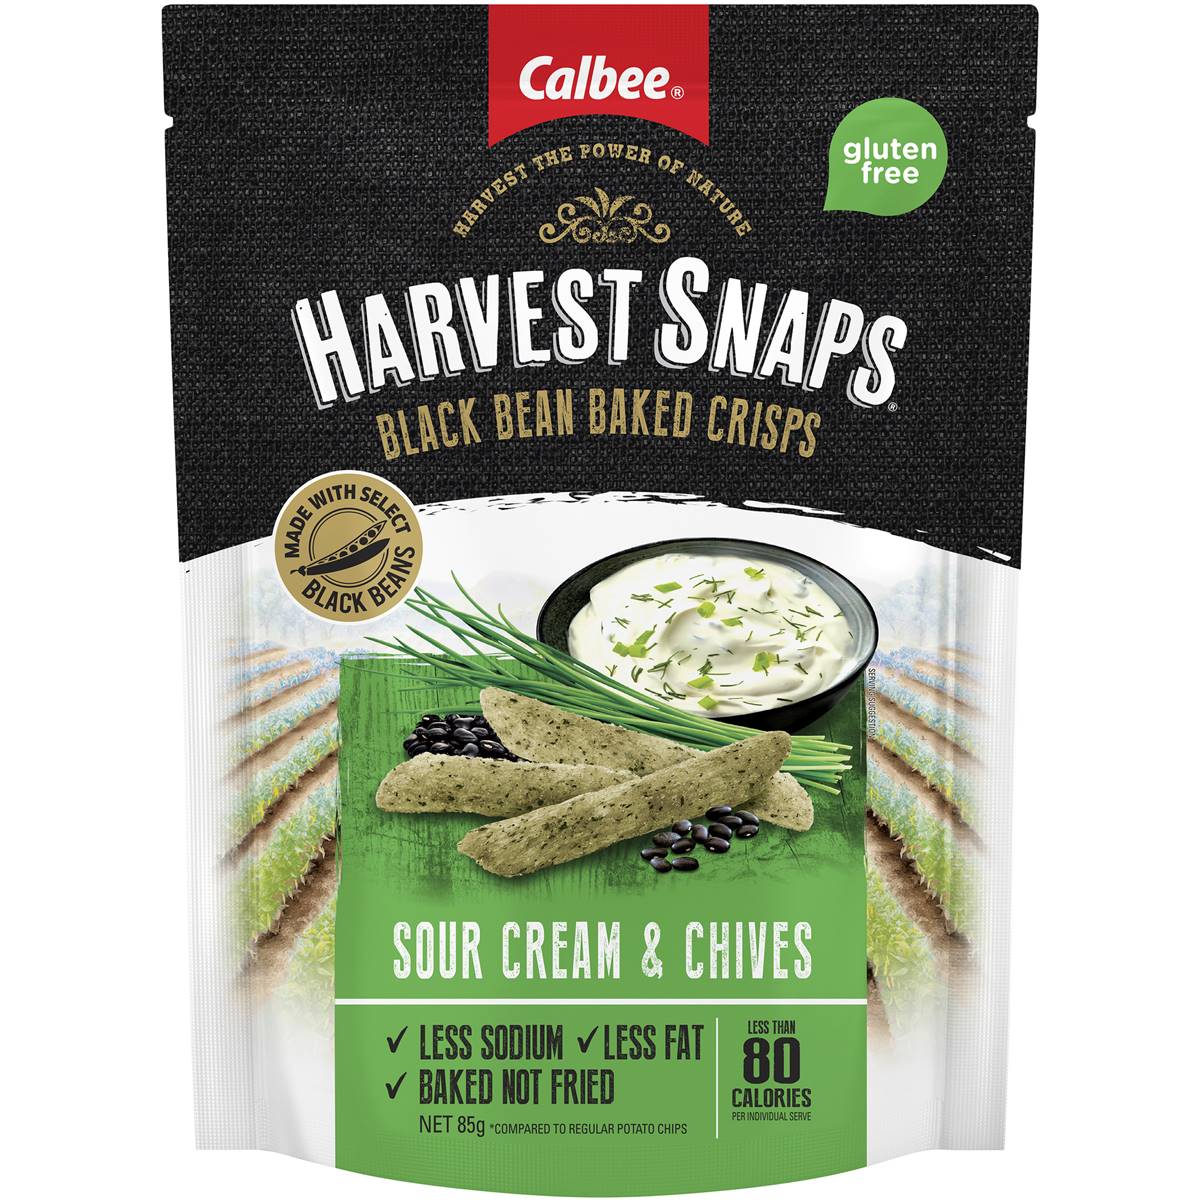 Calories in Calbee Harvest Snaps Black Bean Sour Cream Baked Crisps